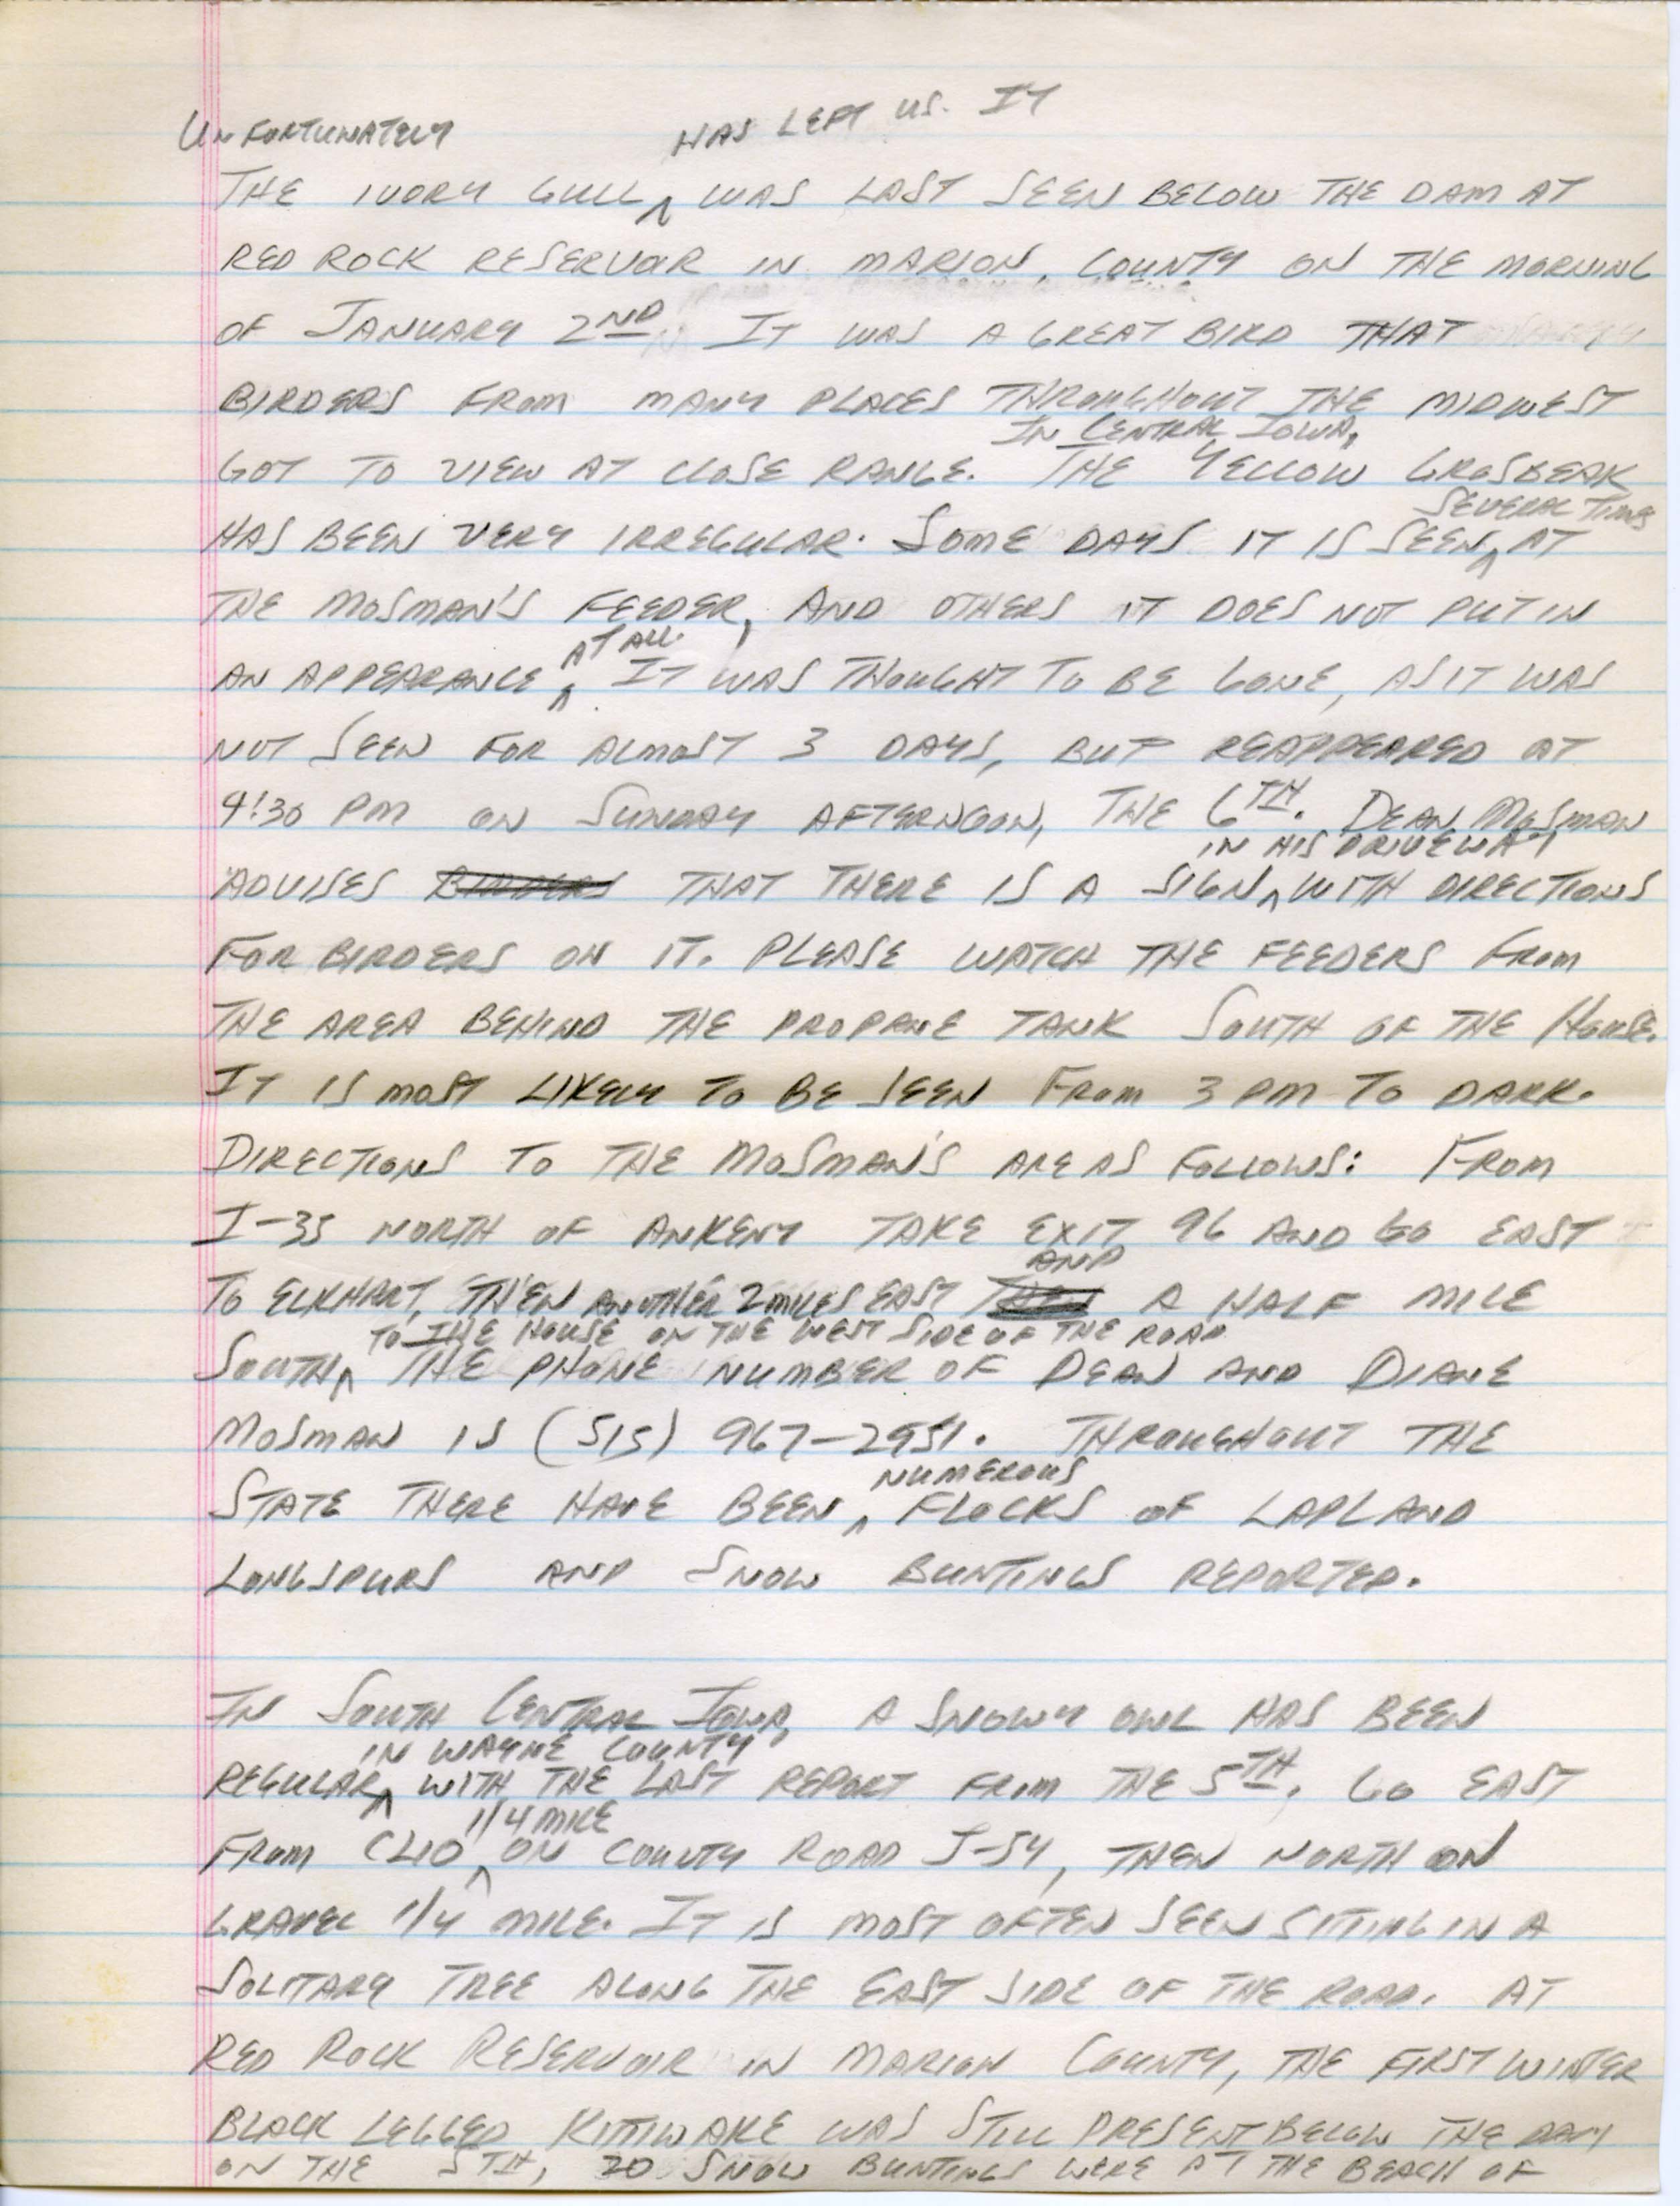 Iowa Birdline update, January 7, 1991 notes